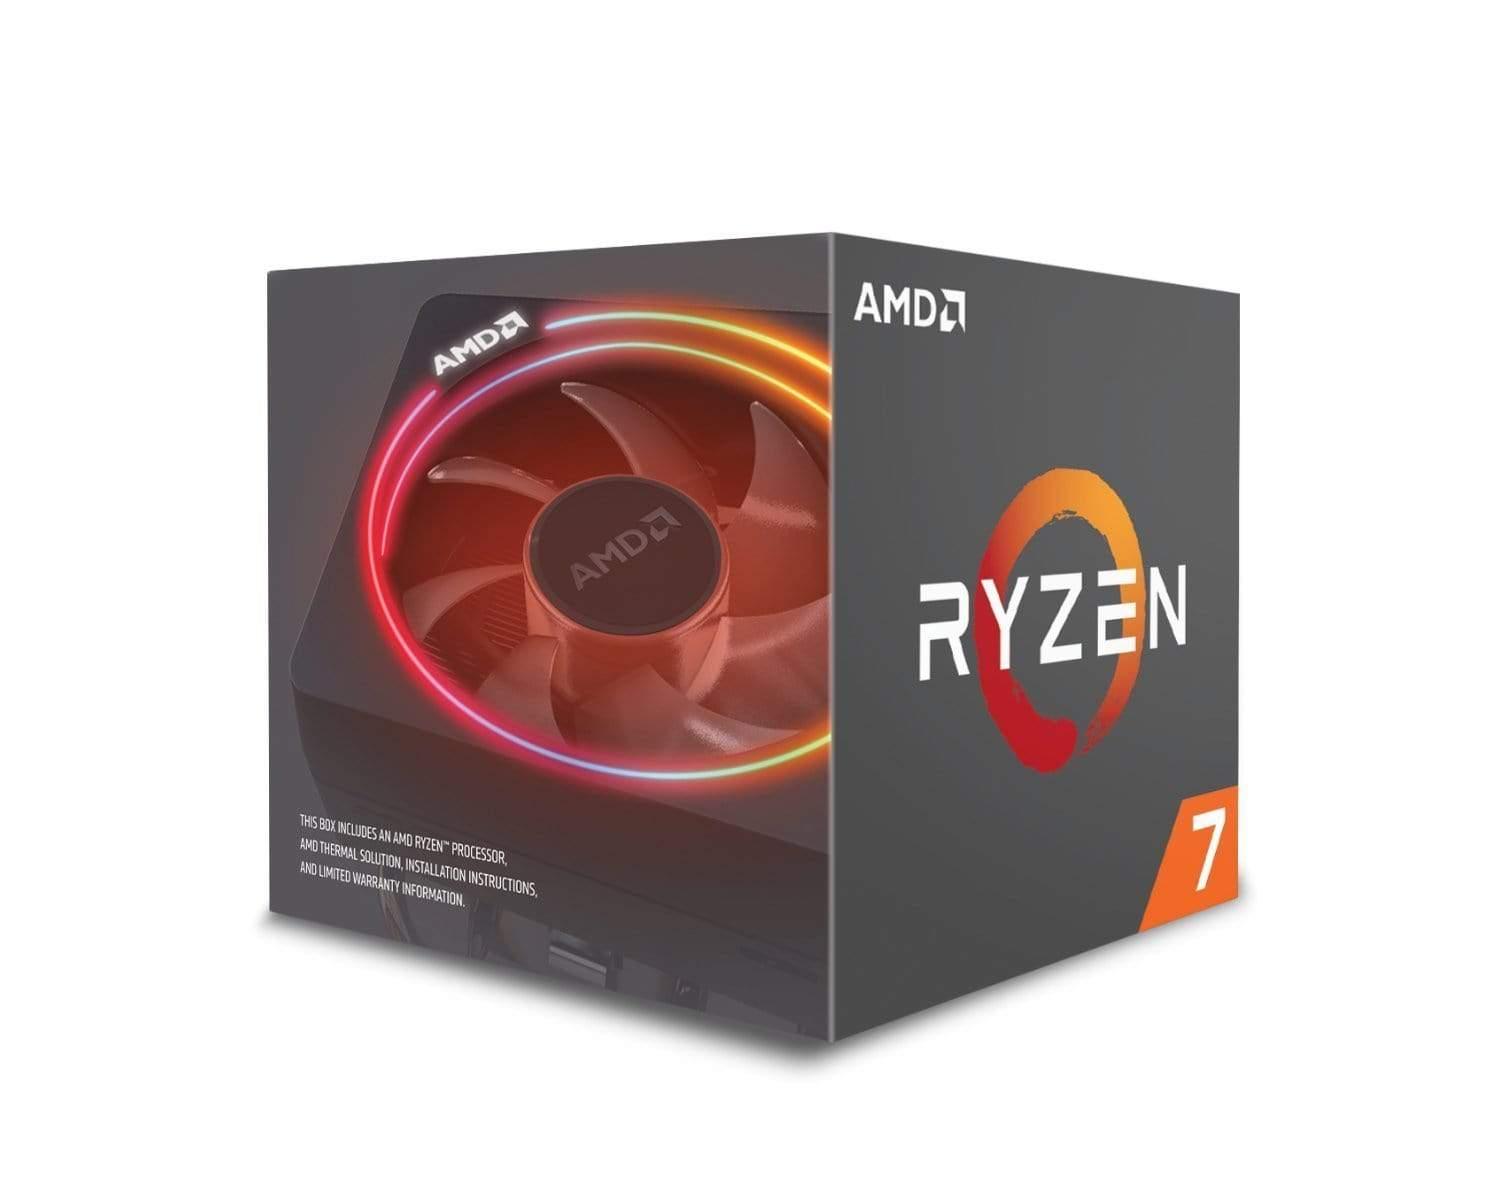 AMD Ryzen 7 2700X Desktop Processor 8 Cores up to 4.3GHz-Processor-dealsplant